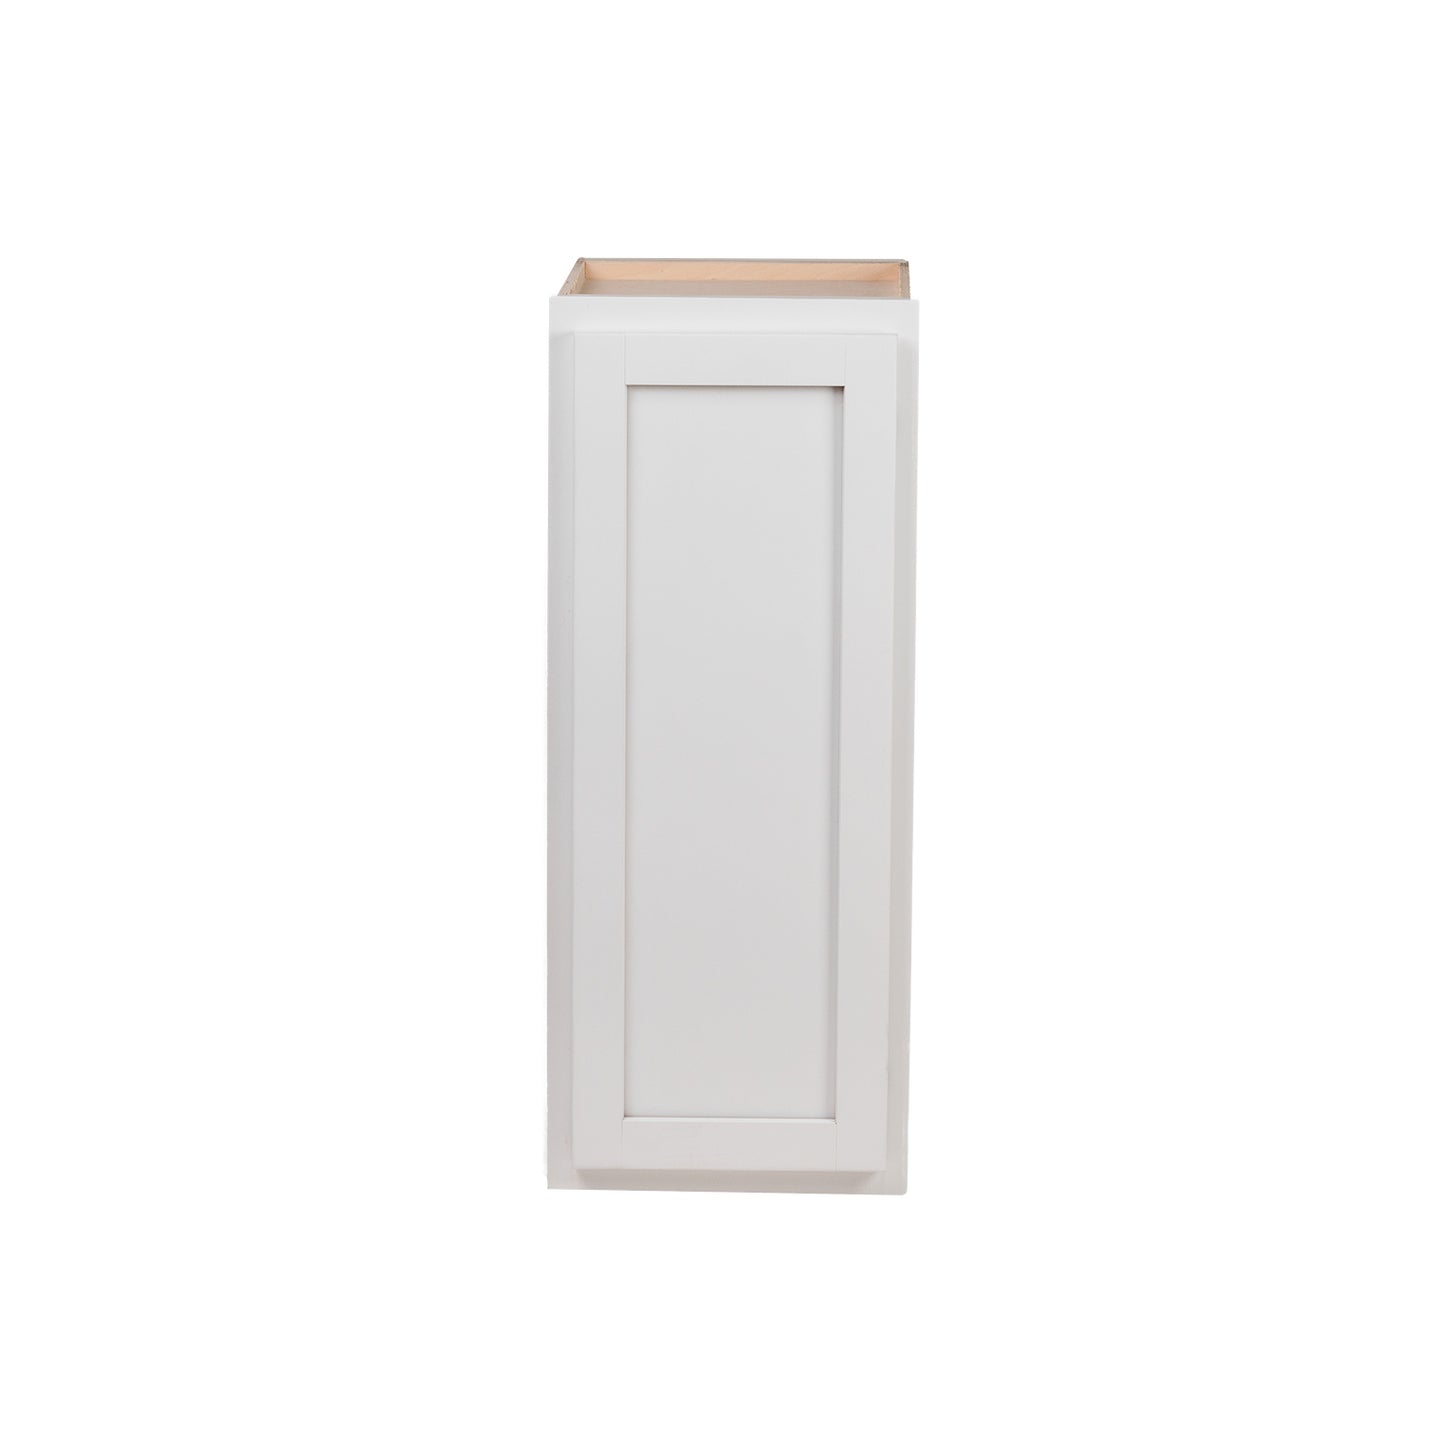 Quicklock RTA (Ready-to-Assemble) Pure White 21"Wx36"Hx12"D Wall Cabinet